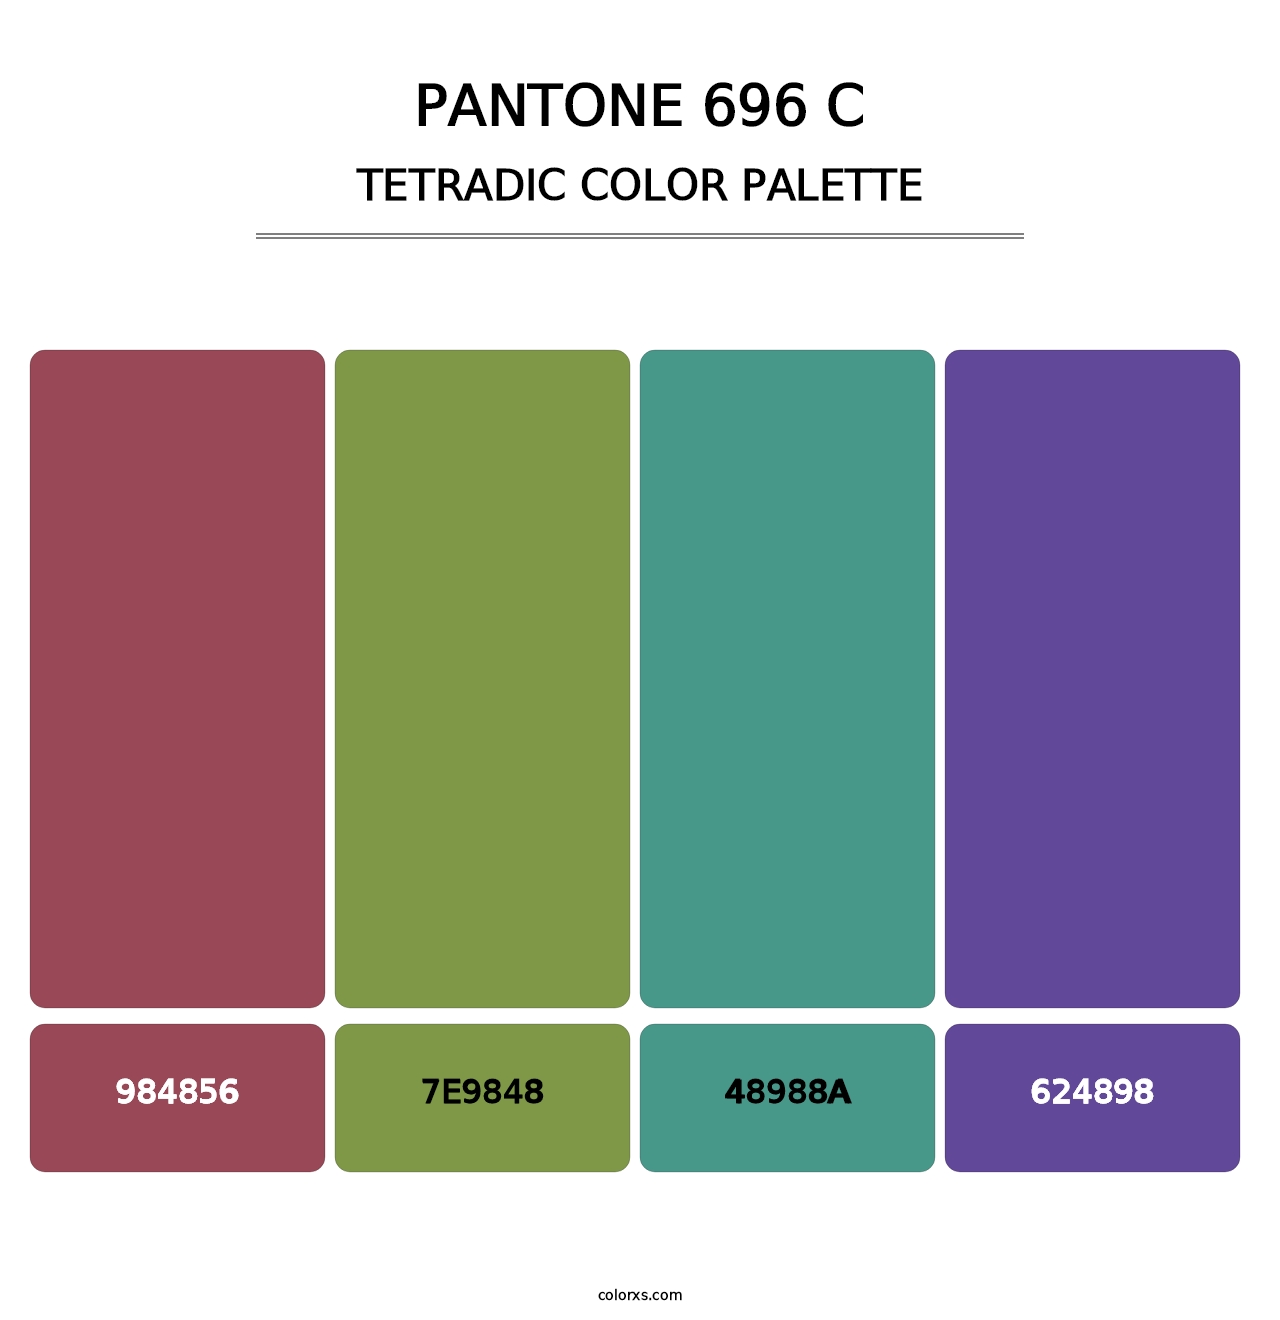 PANTONE 696 C - Tetradic Color Palette